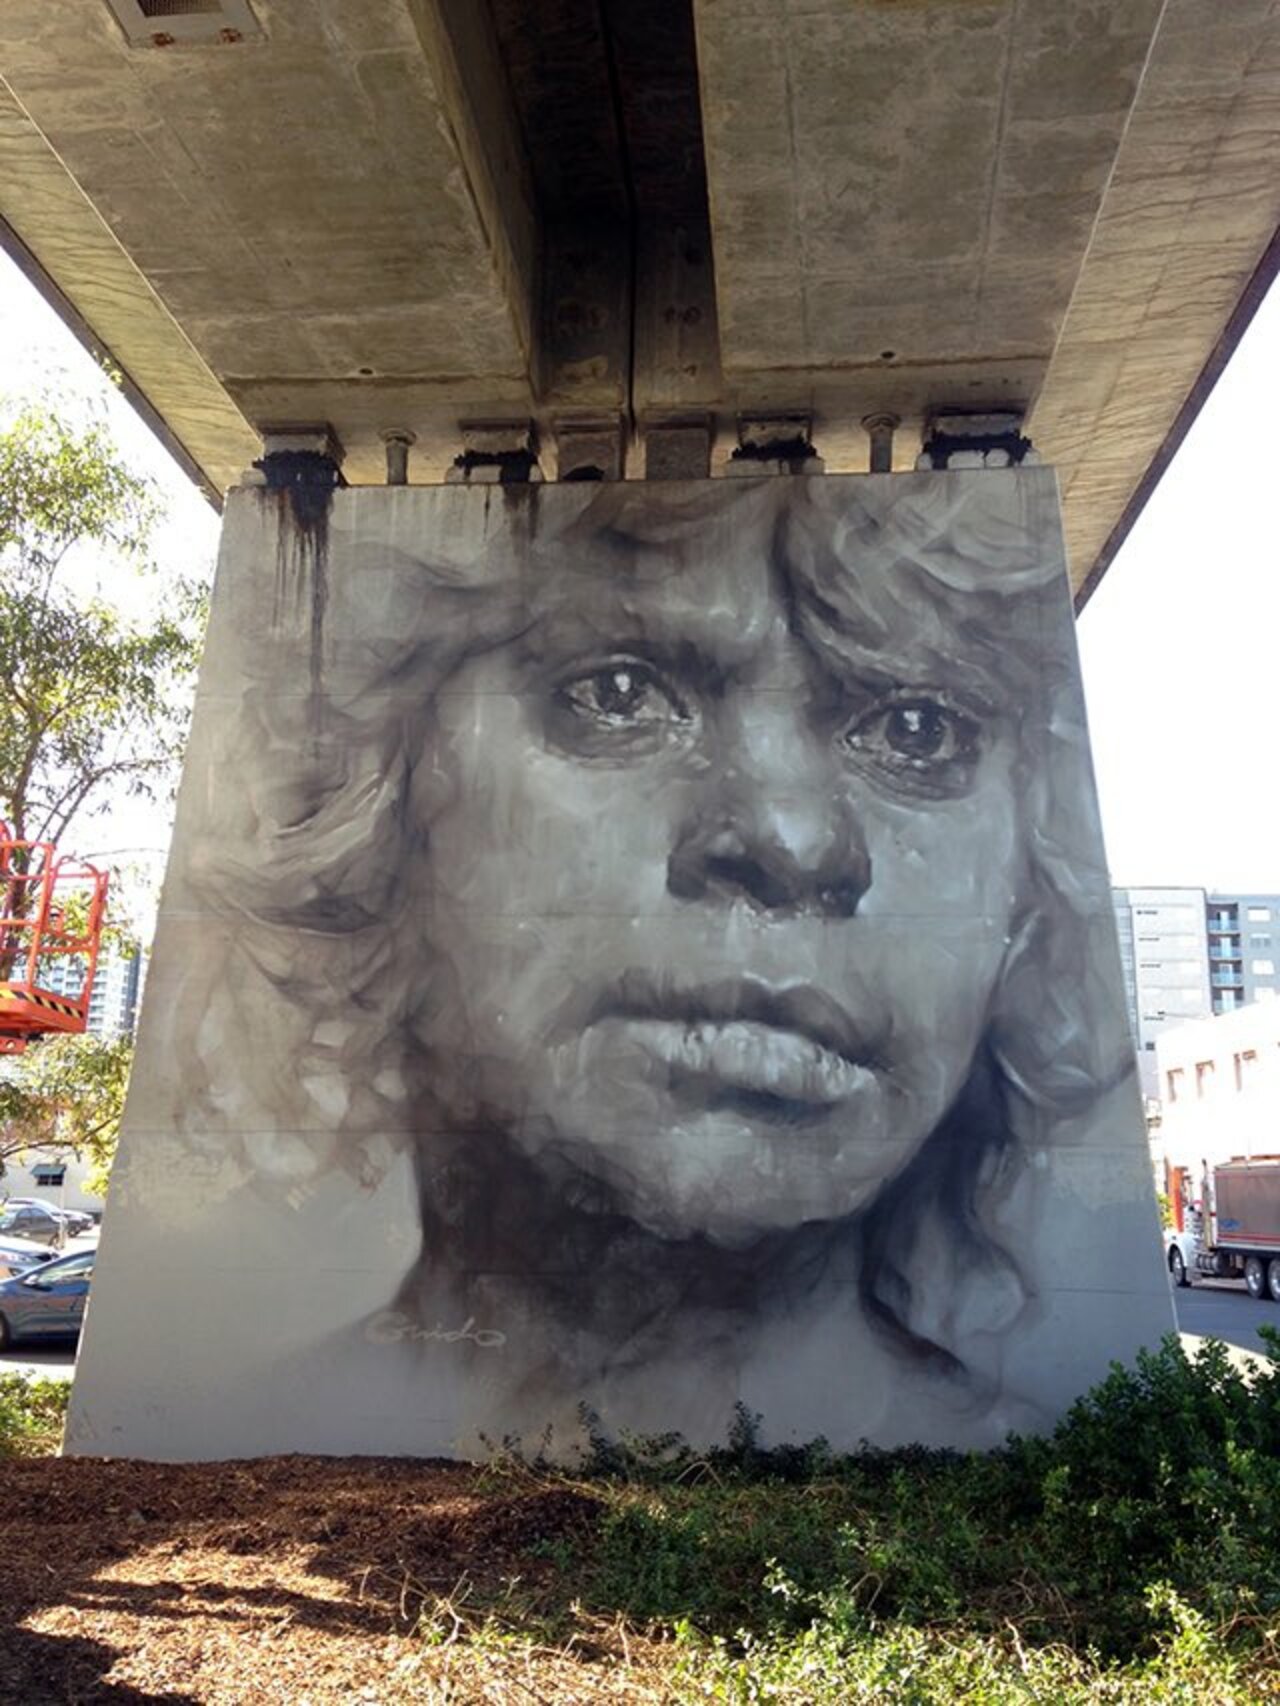 Brisbane, Australia #mural #streetart #urbanart #art #Graffiti #Brisbane #Australia https://t.co/PuRoz1zROH